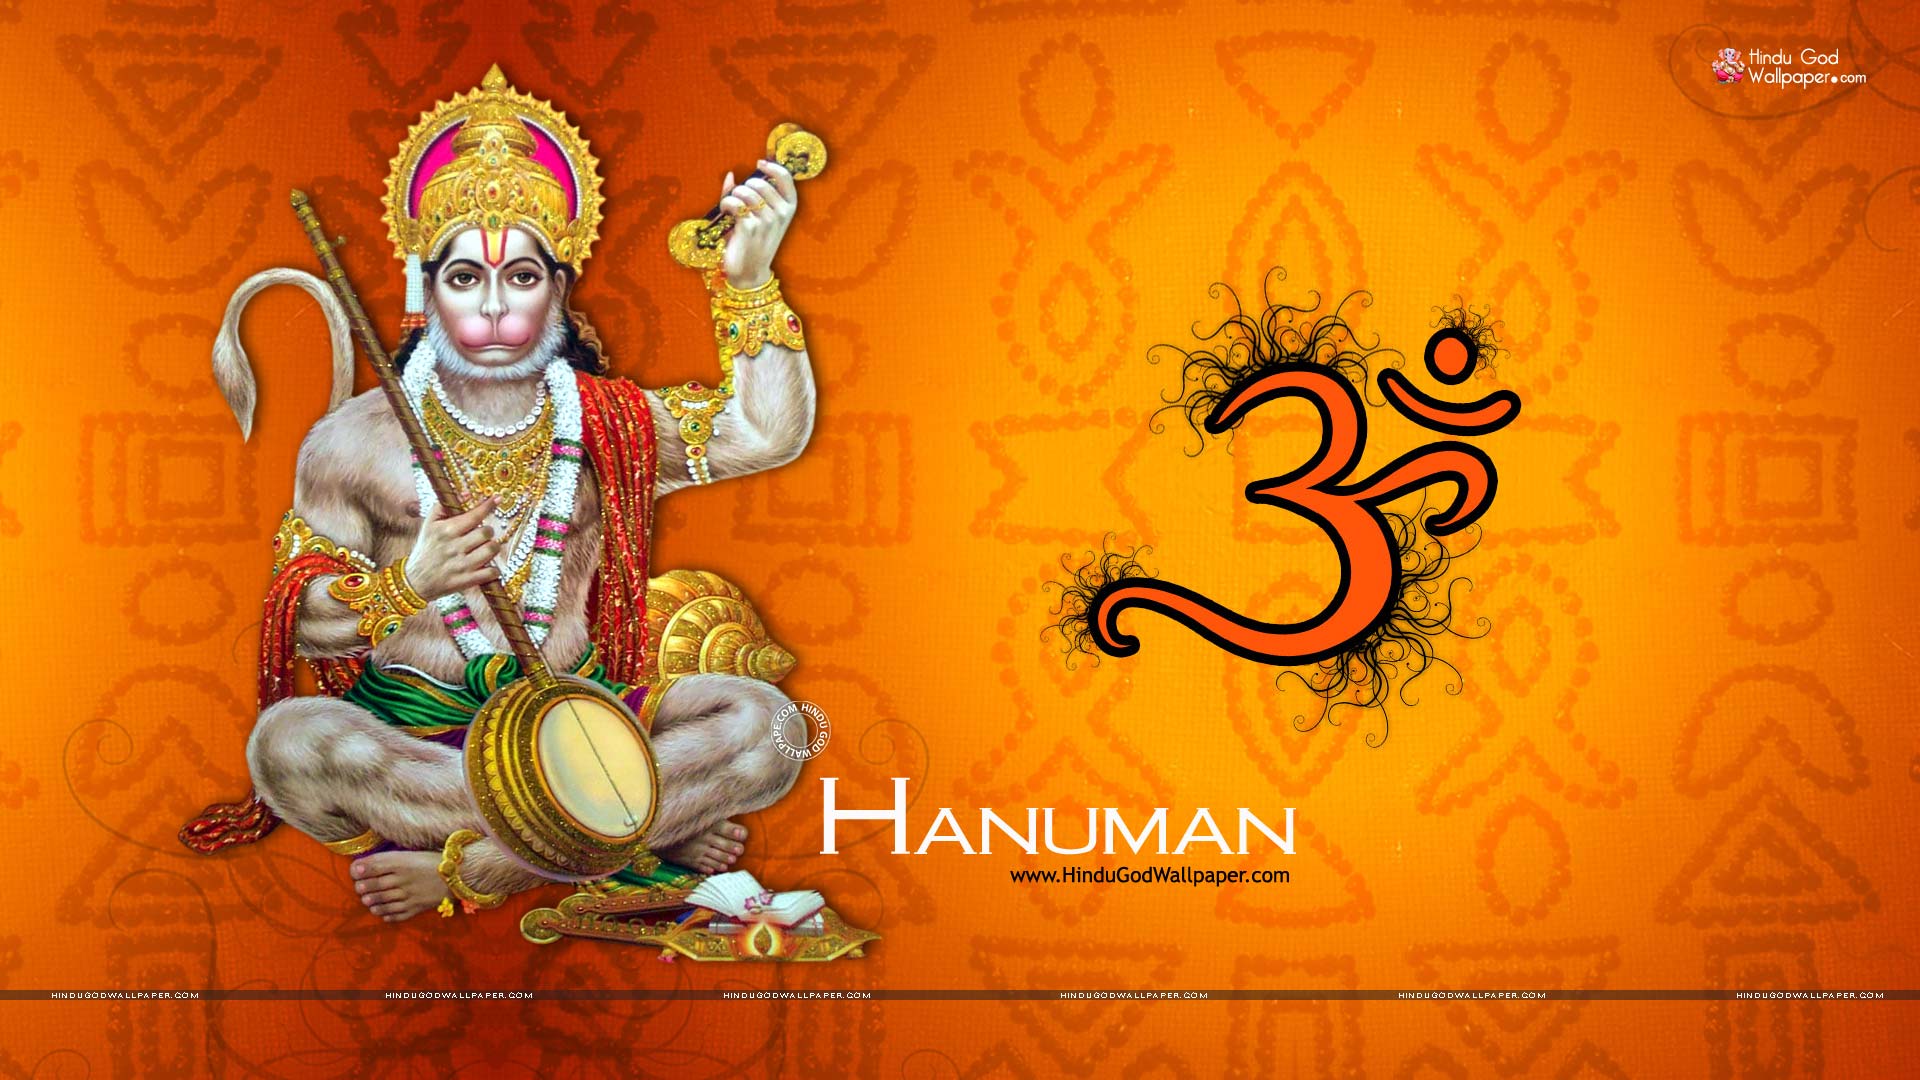 Hindu God Wallpaper Image Full Size Free Download